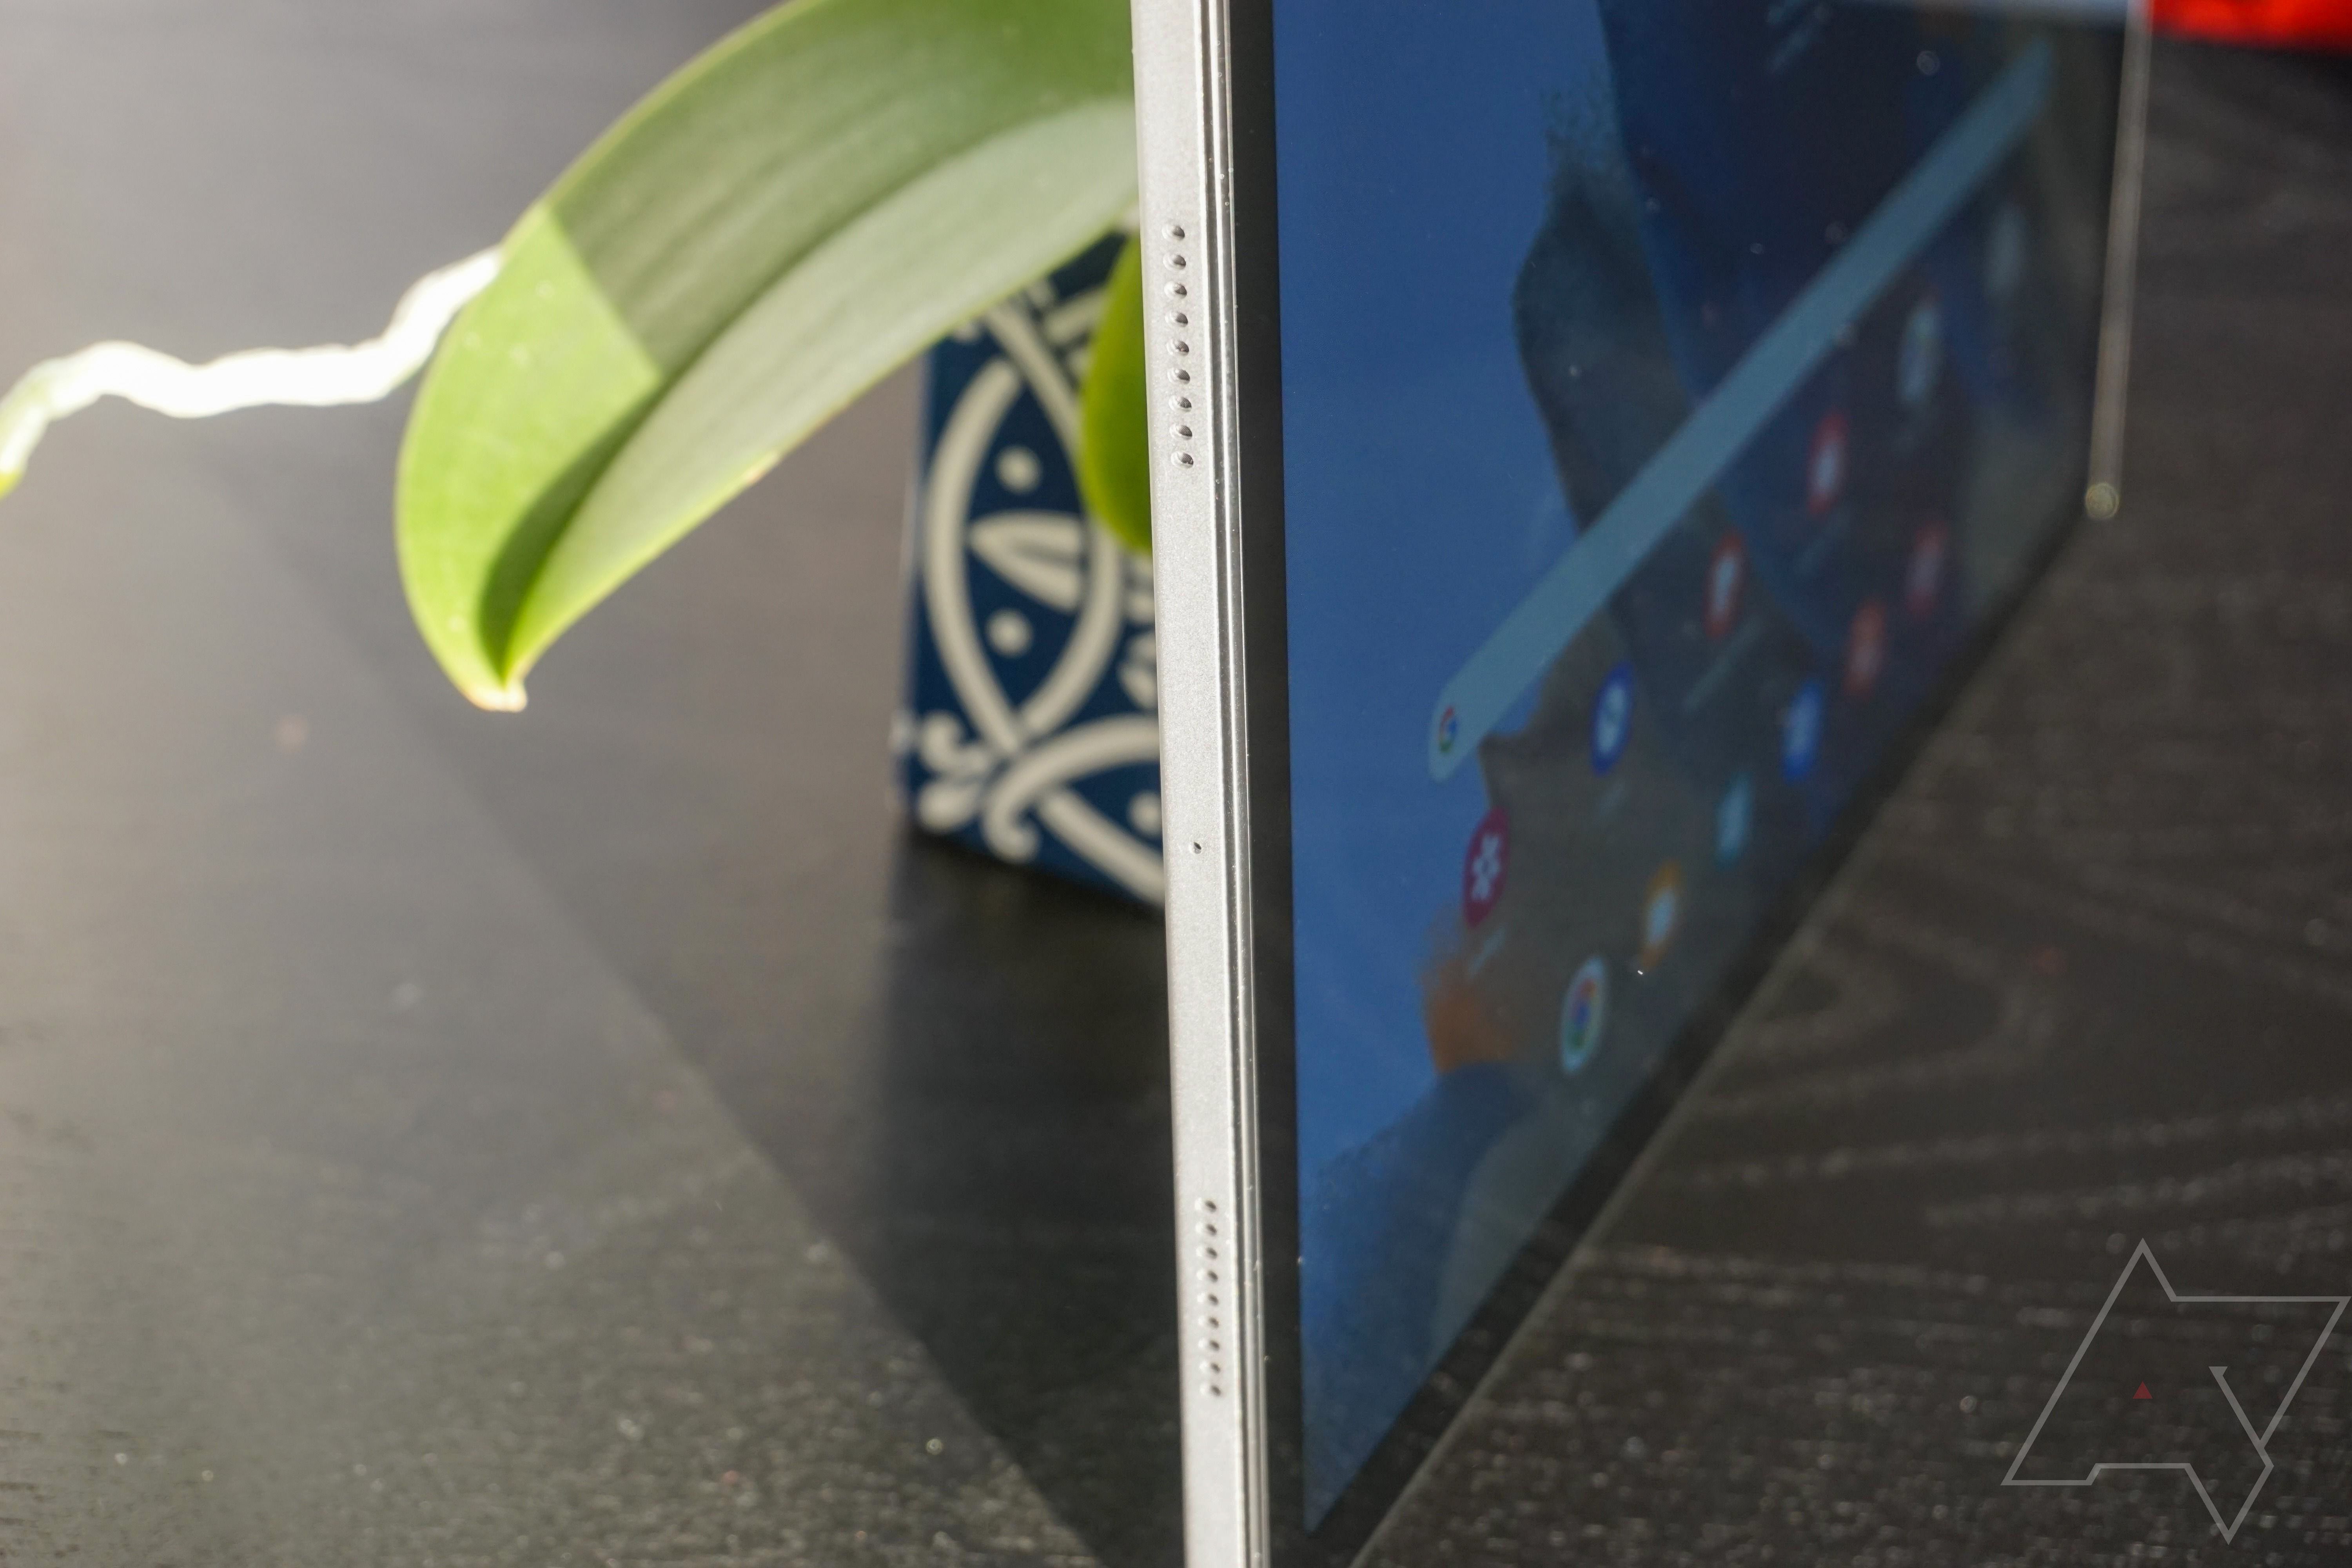 Samsung Galaxy Tab A9 Plus VS Samsung Galaxy Tab S6 Lite (2022